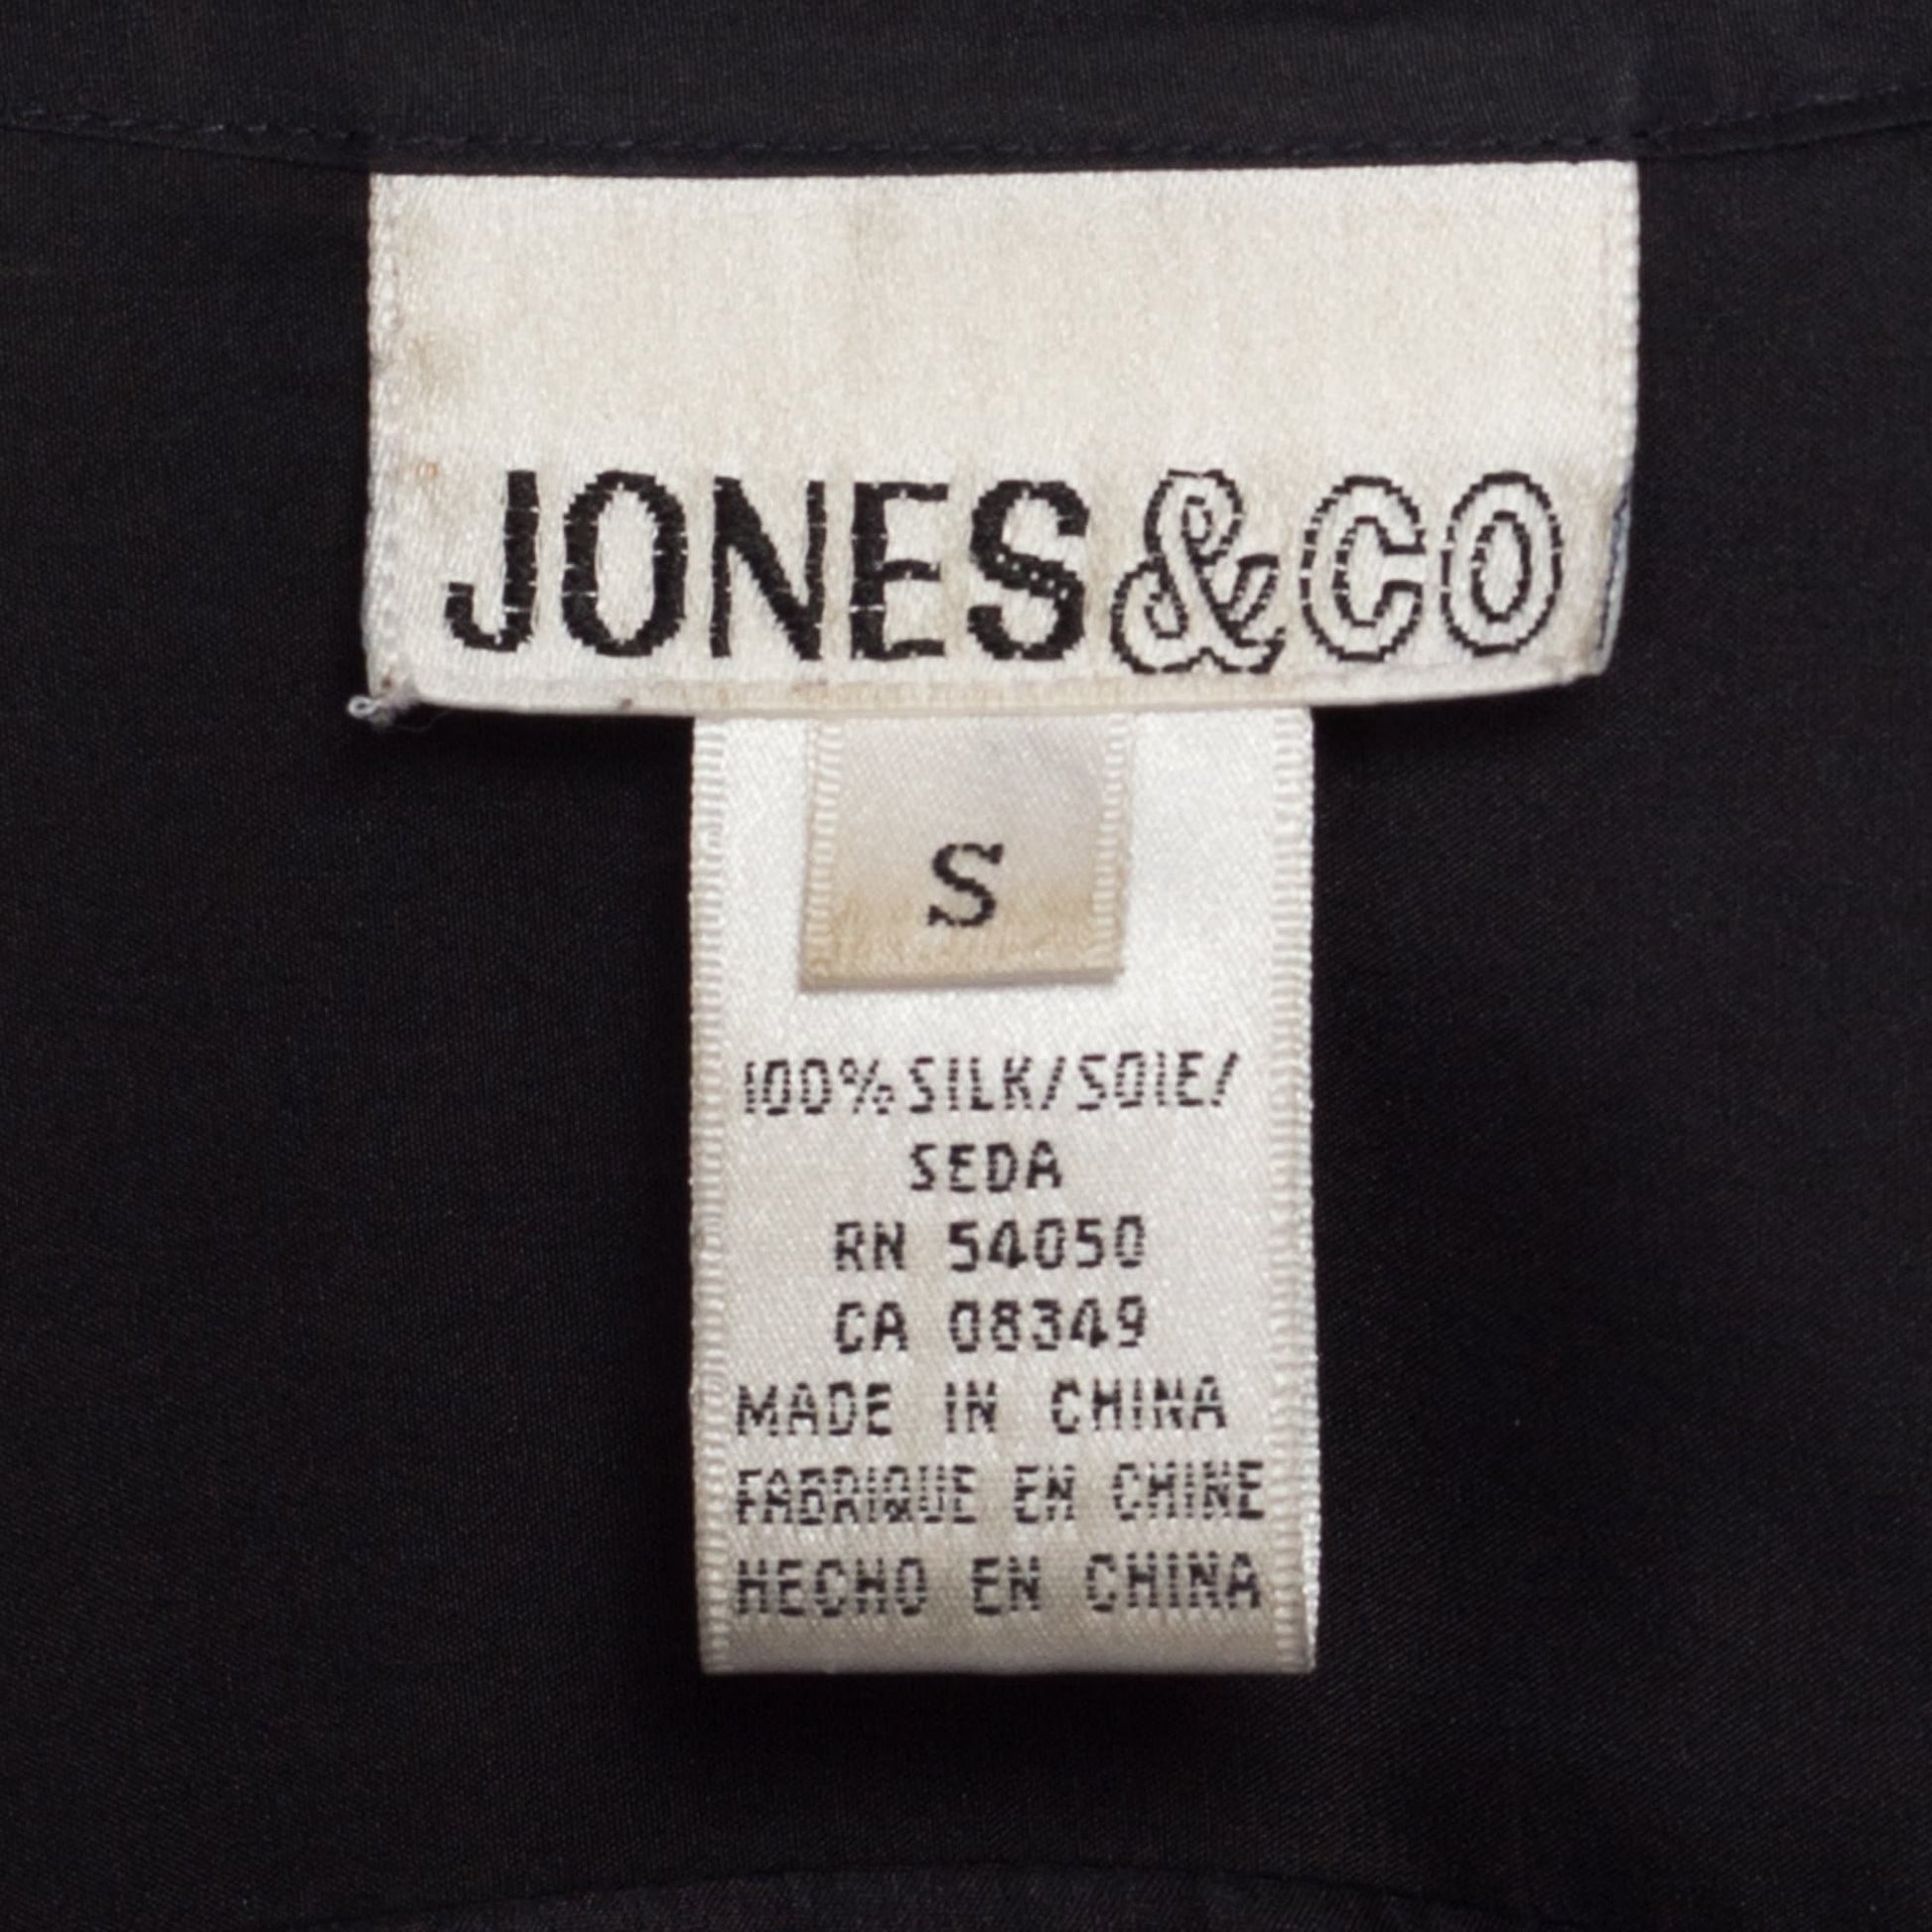 Small 90s Black Silk Collarless Blouse | Vintage Minimalist Long Sleeve Abalone Button Up Shirt